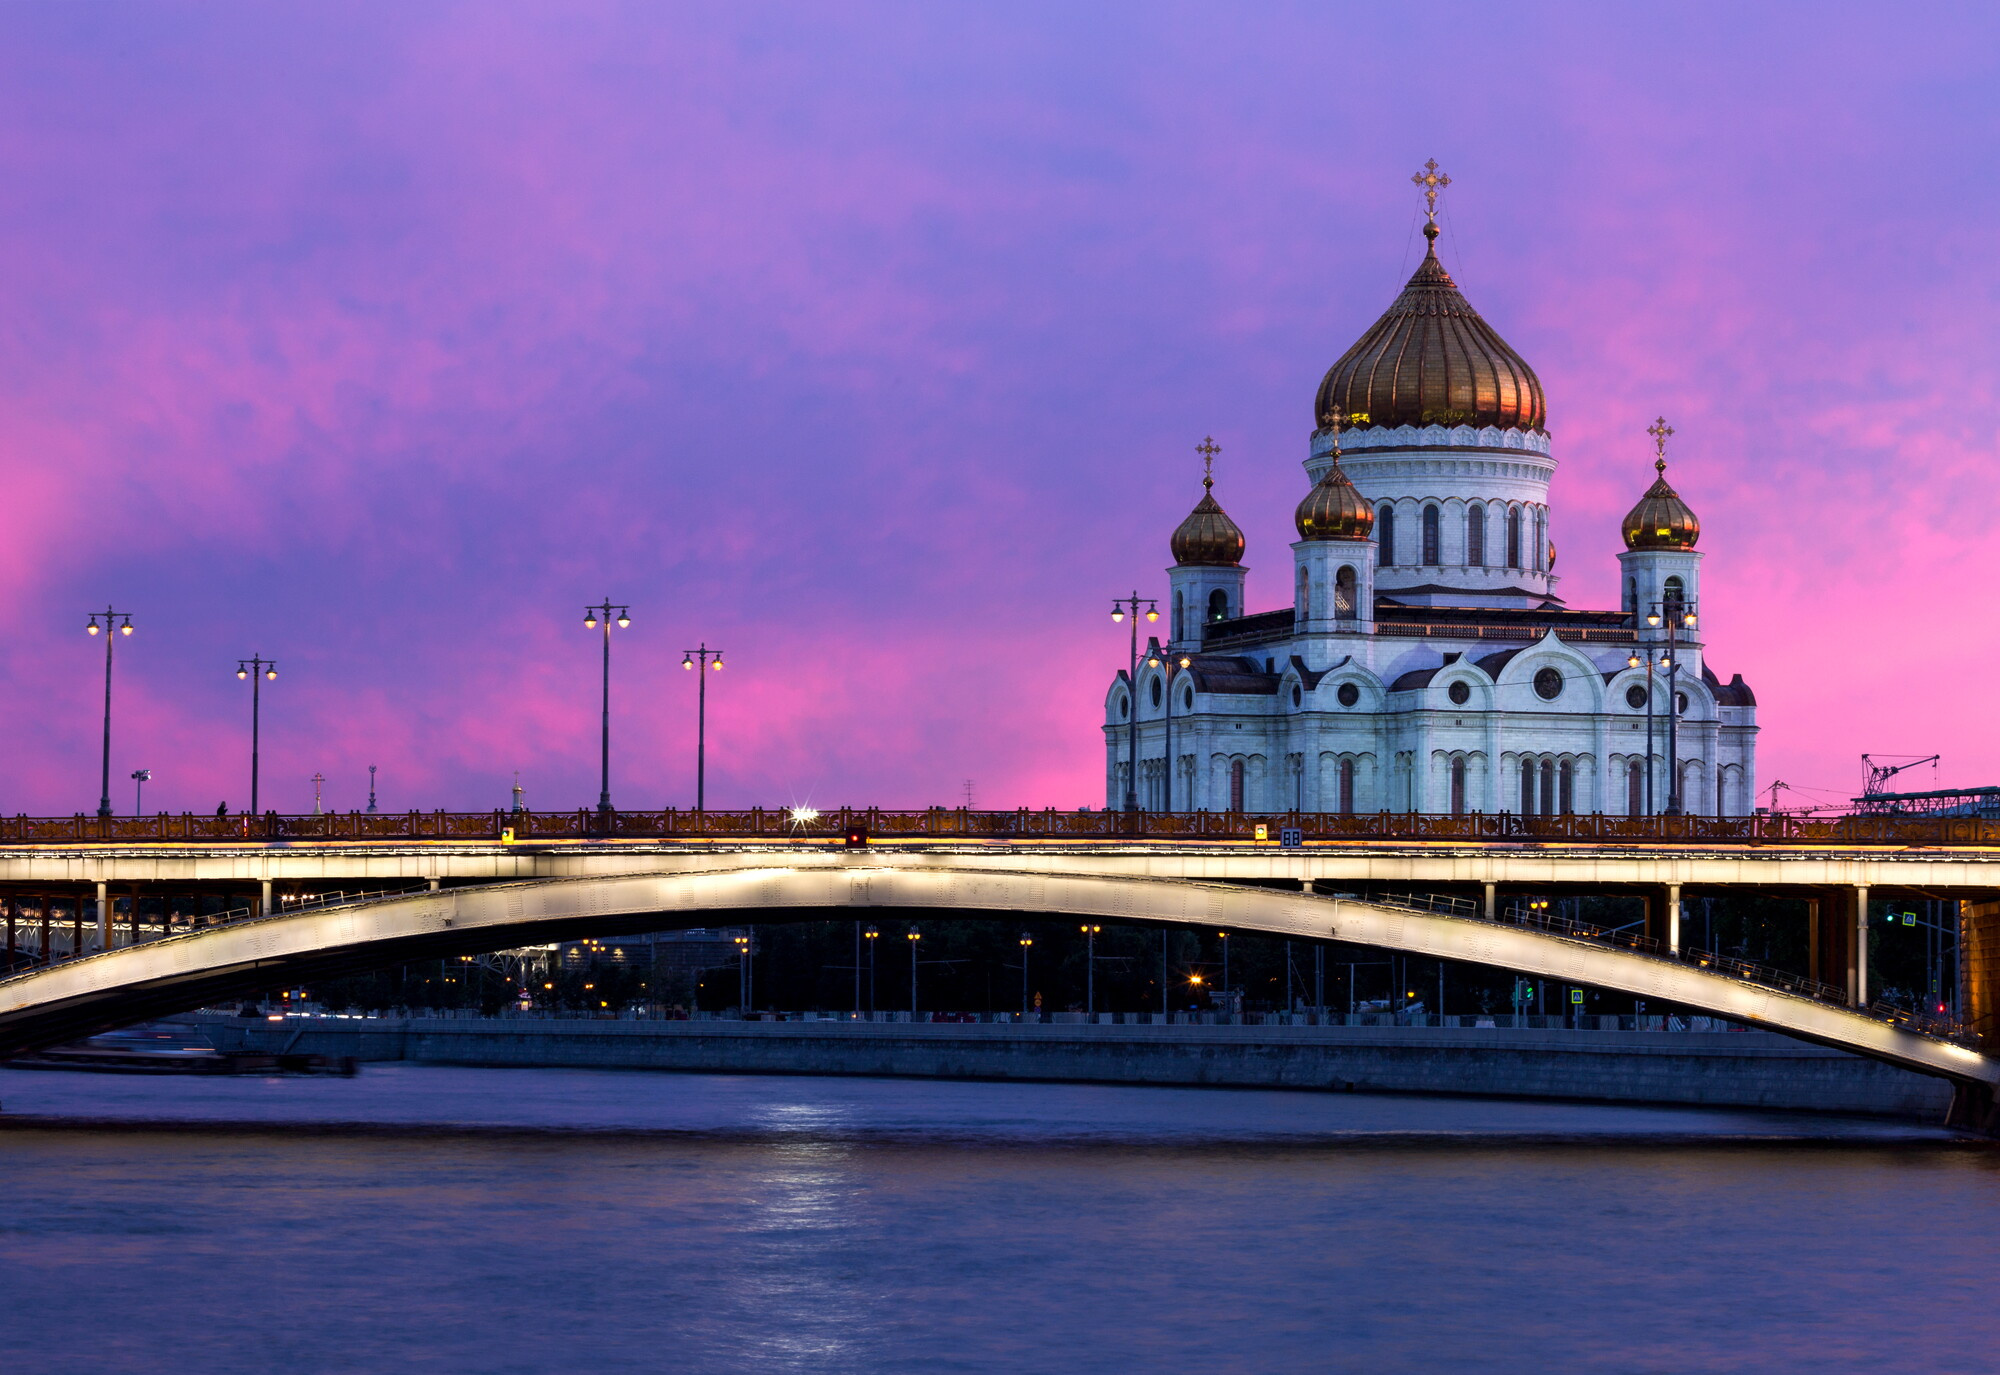 Храм Христа Спасителя в Москве вечером на фоне заката. Фото: Олег Иванов, участник конкурса РГО 